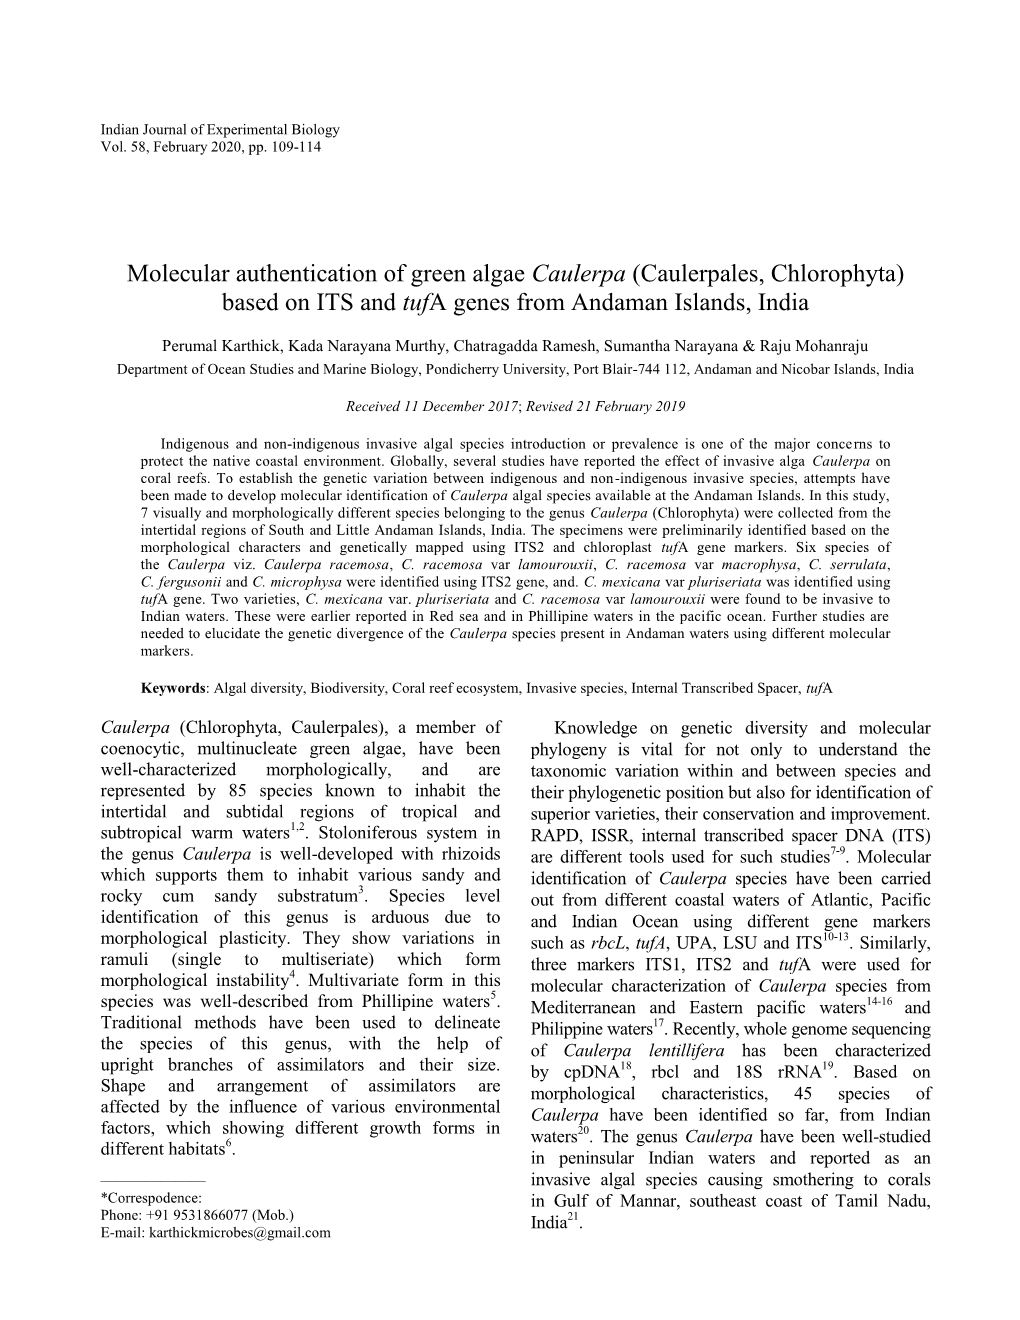 Molecular Authentication of Green Algae Caulerpa (Caulerpales, Chlorophyta) Based on ITS and Tufa Genes from Andaman Islands, India